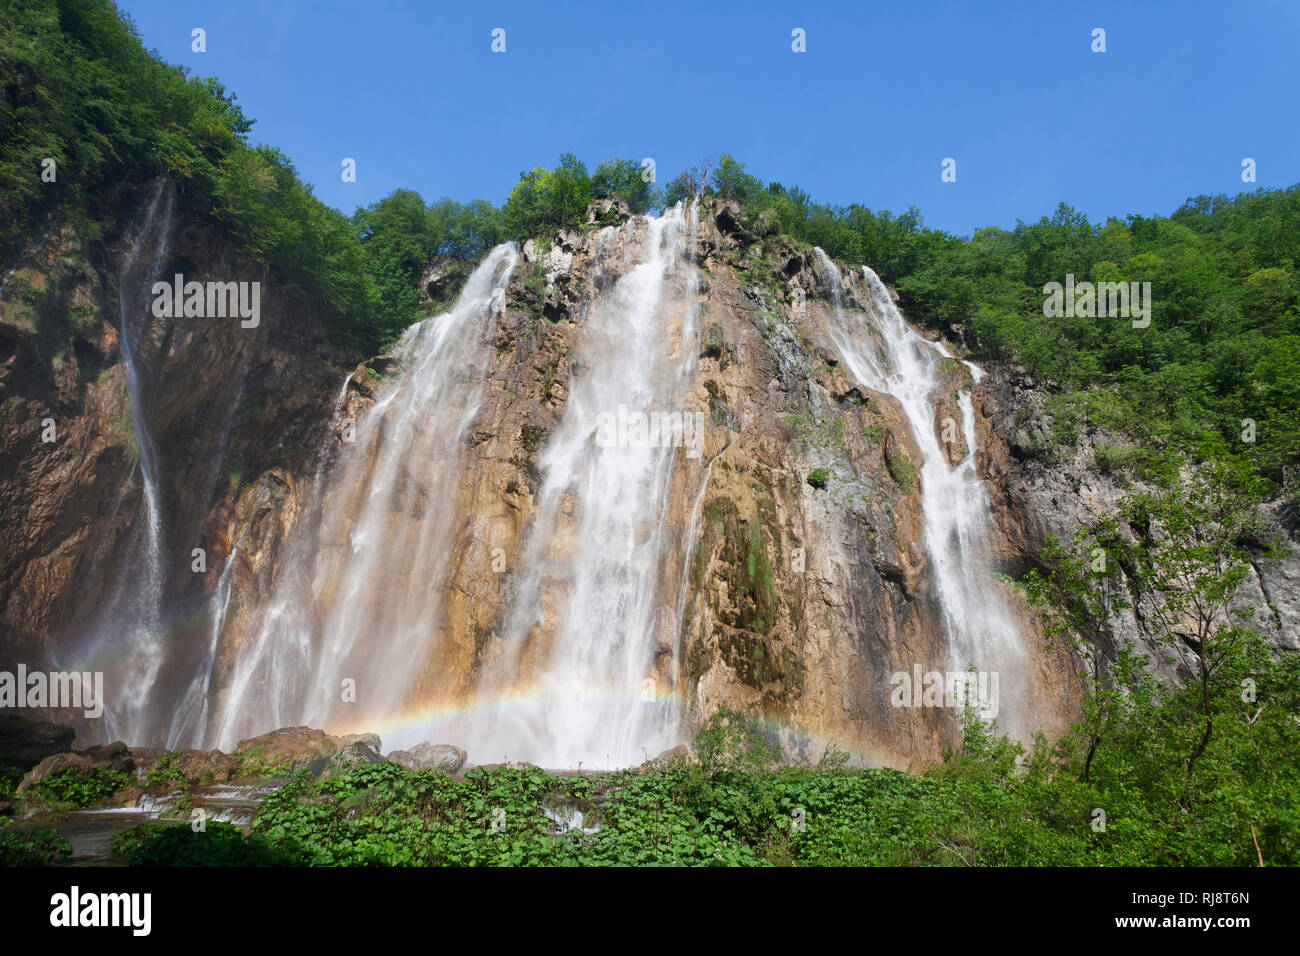 Regenbogen un einem Wasserfall Veliki Slap, Nationalpark Plitvicer visto, UNESCO Weltnaturerbe, Kroatien Foto Stock